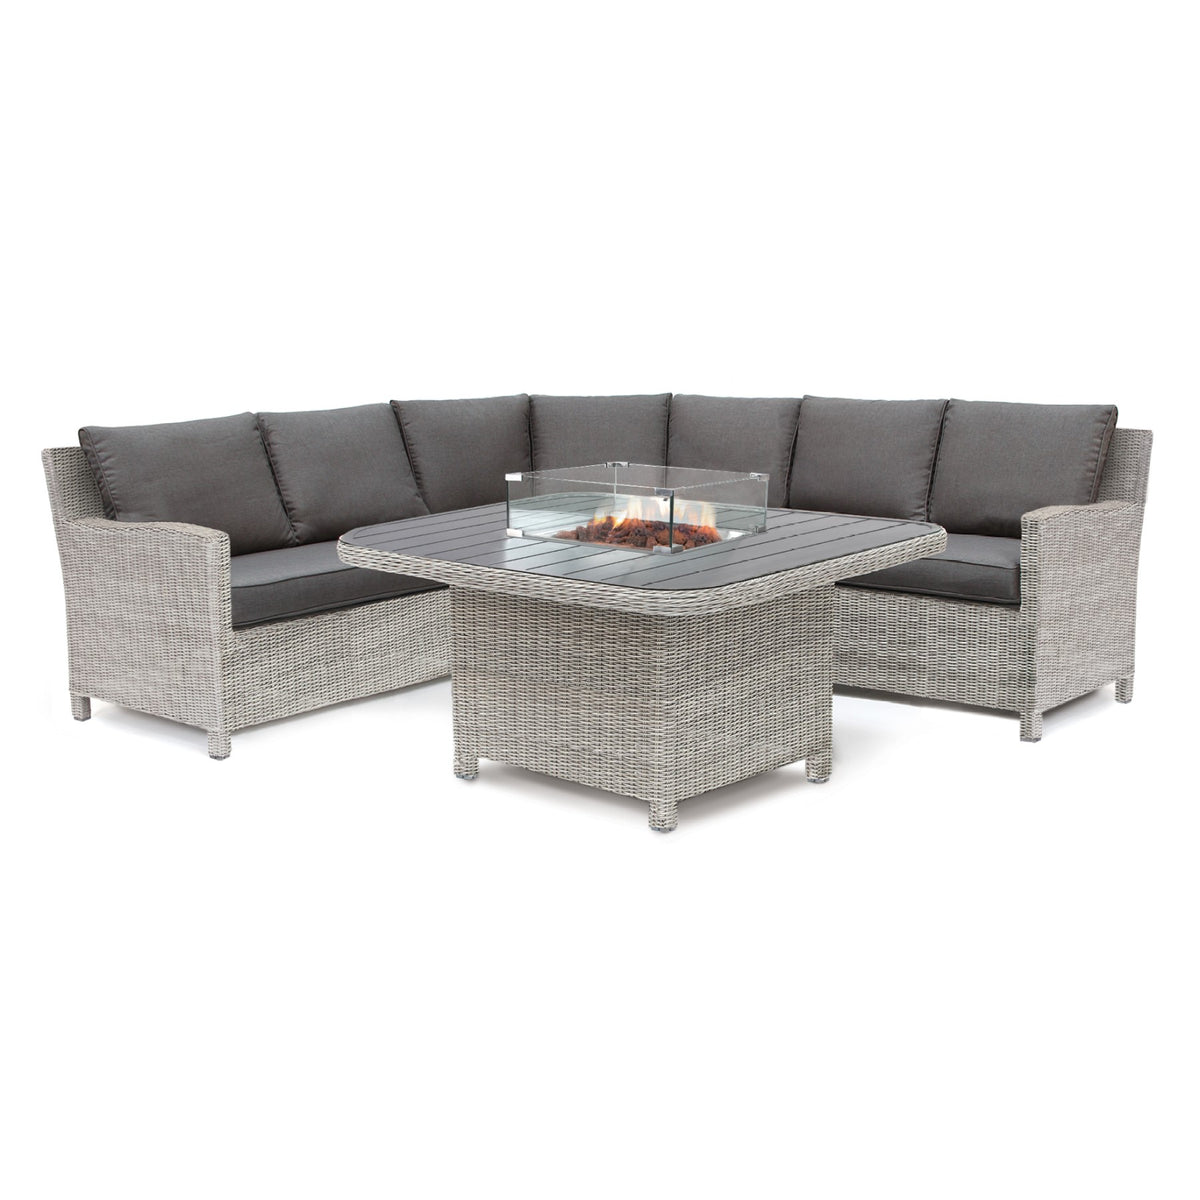 Kettler Palma Grande Corner Sofa Set with Fire Pit Table (White Wash)